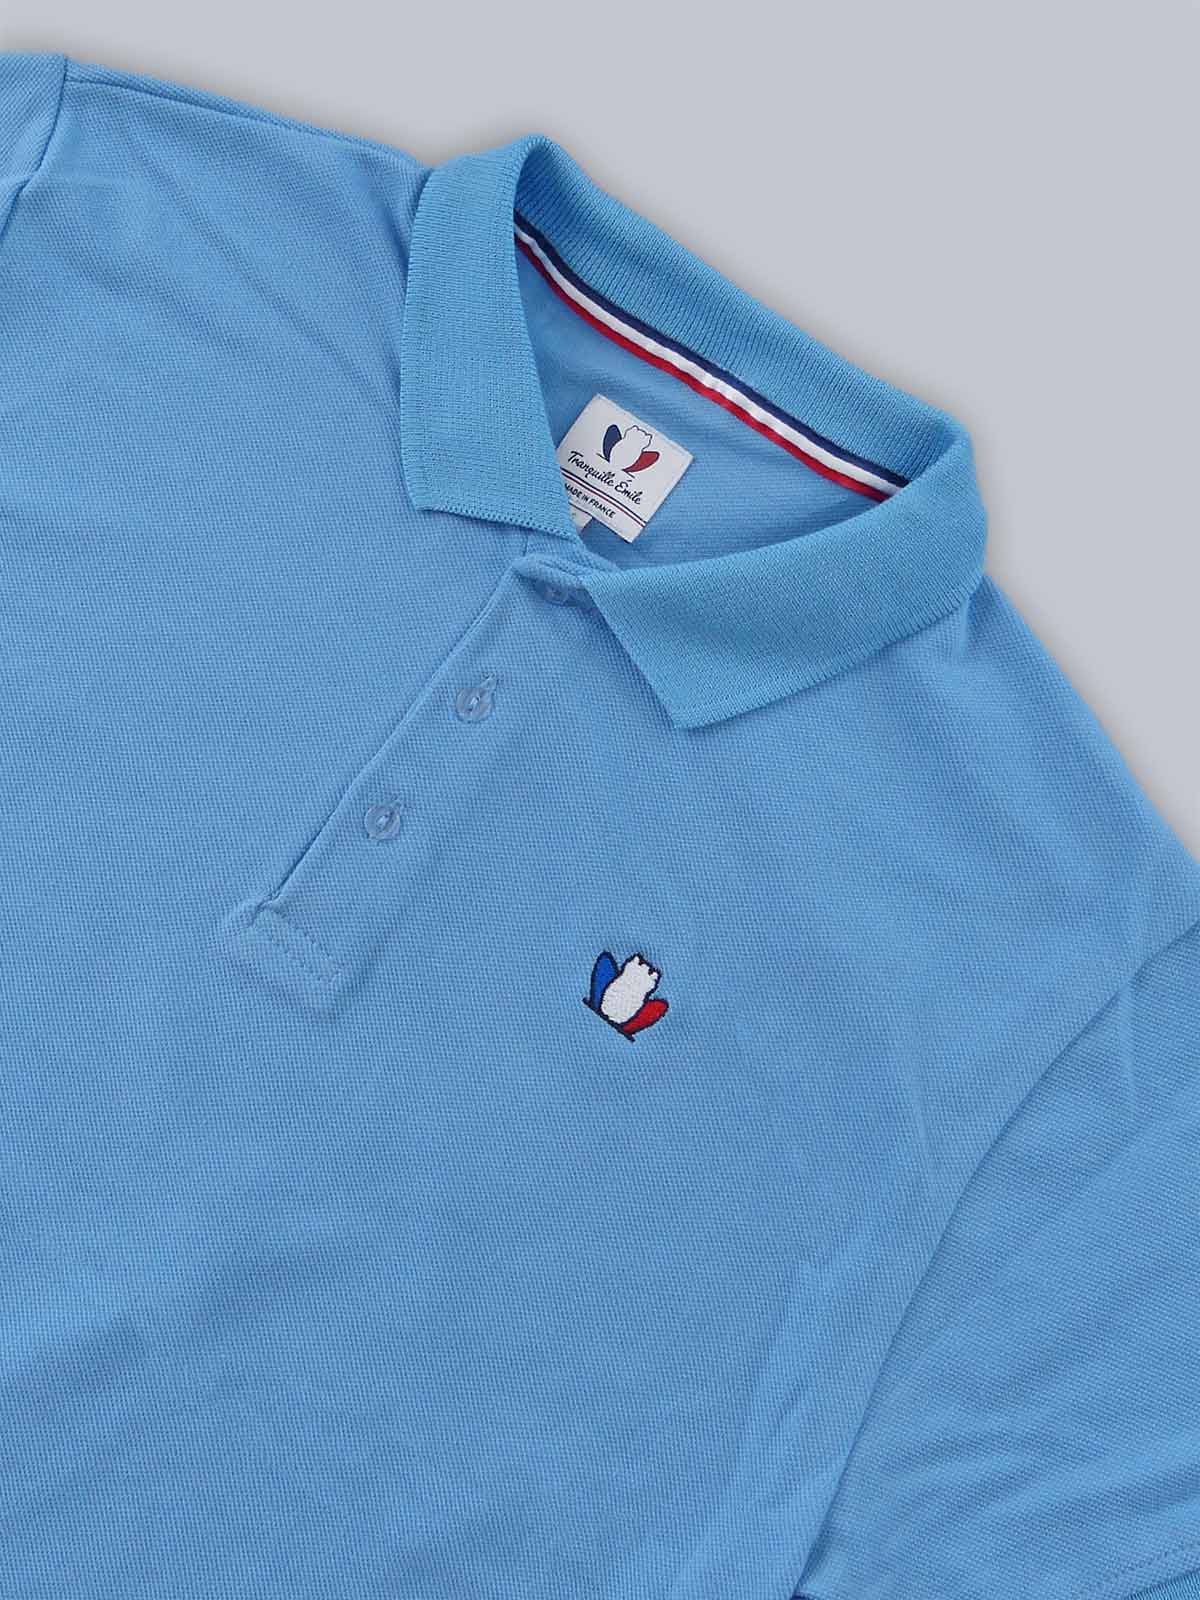 Polo homme made in France bleu ciel - L'Elégant - Tranquille Emile